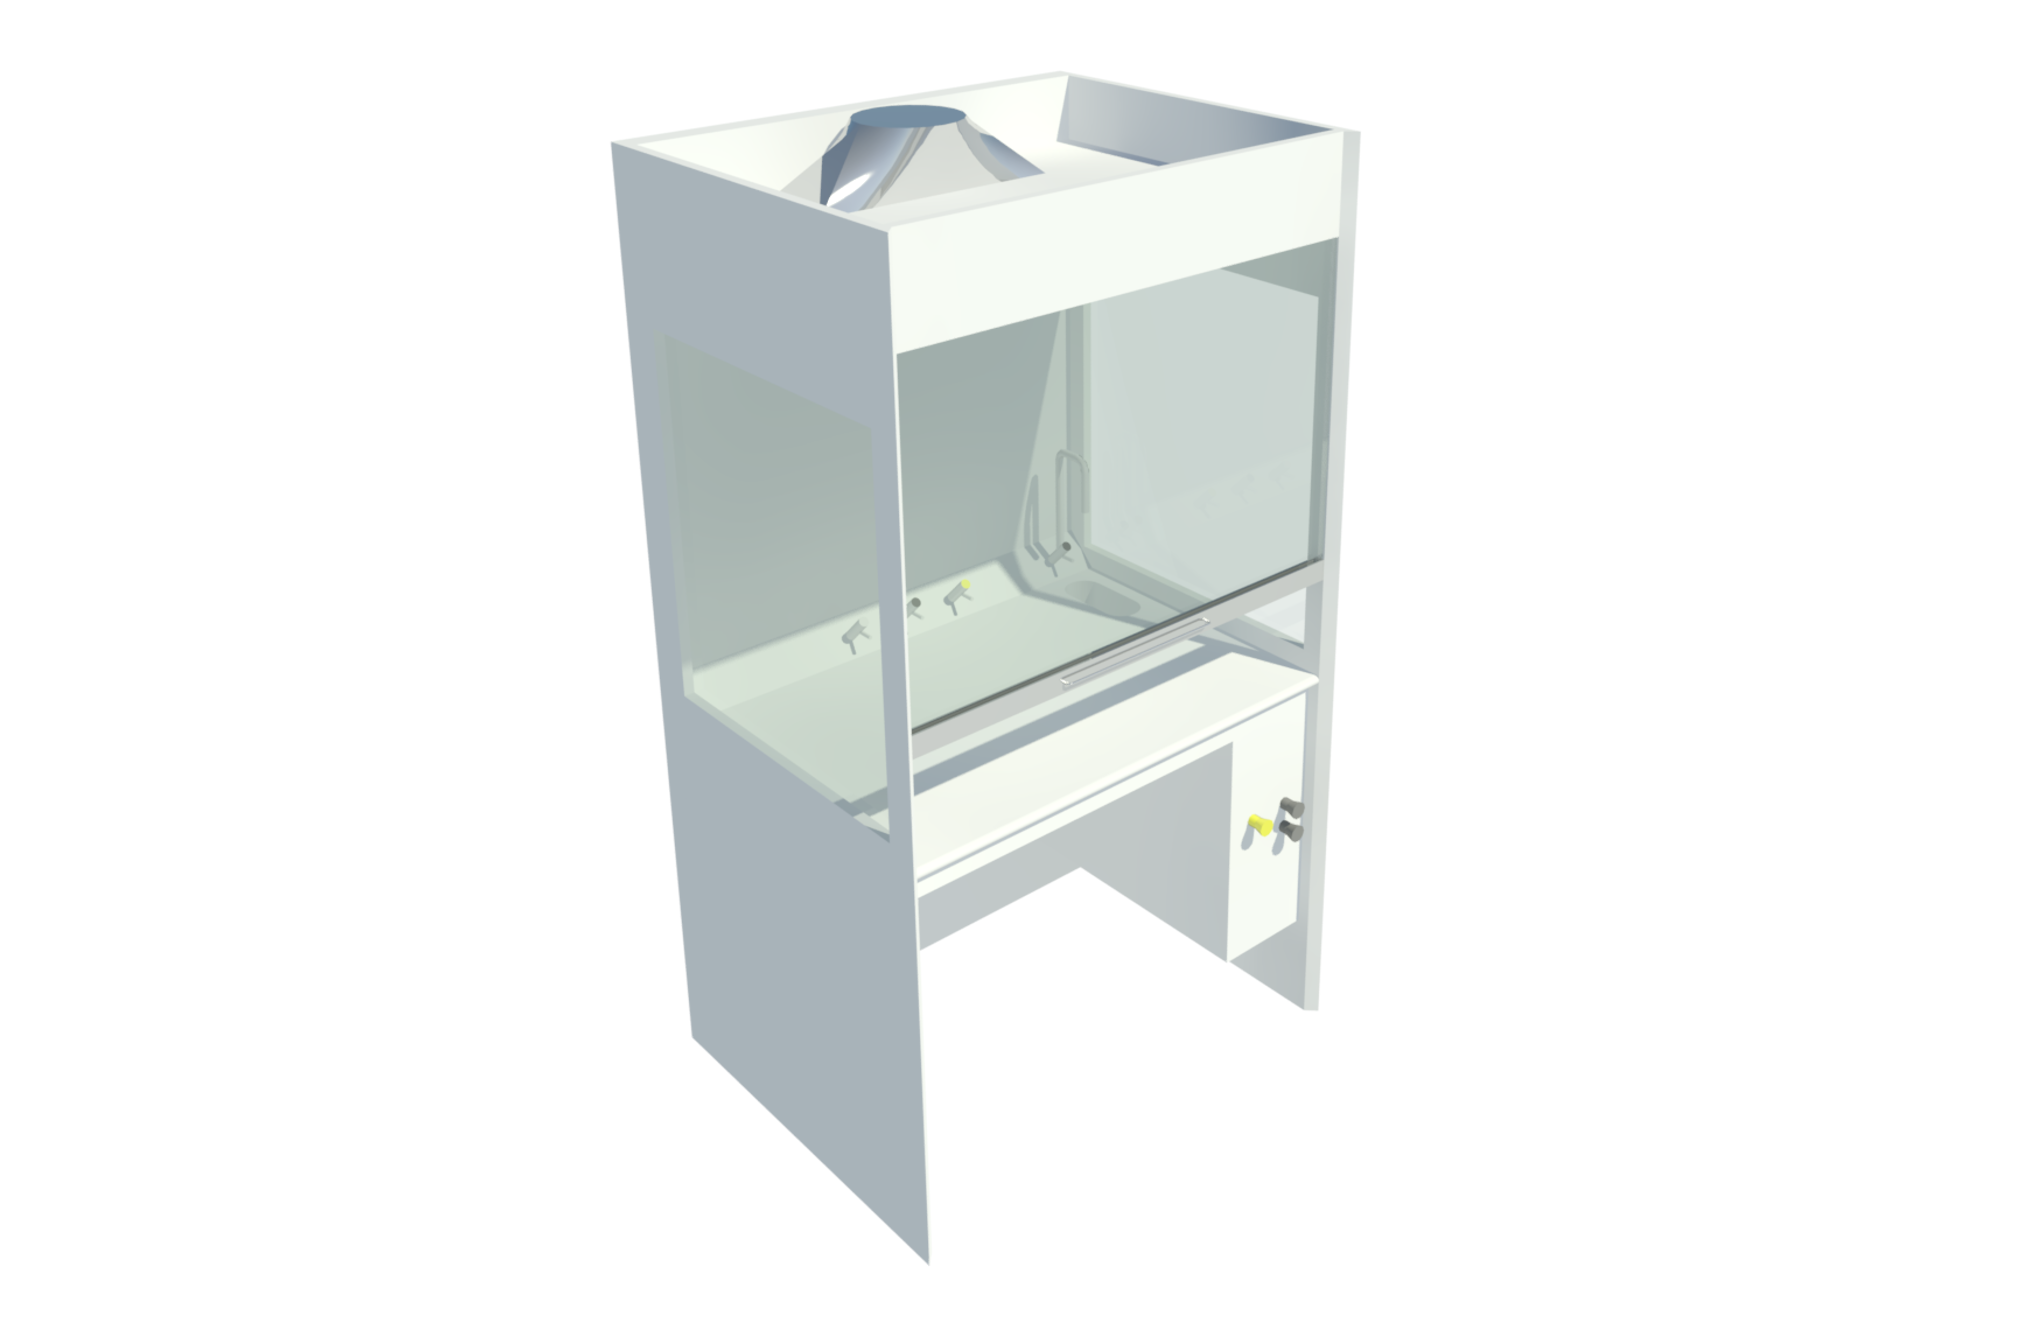 3D rendering showing single walled fume cupboard.